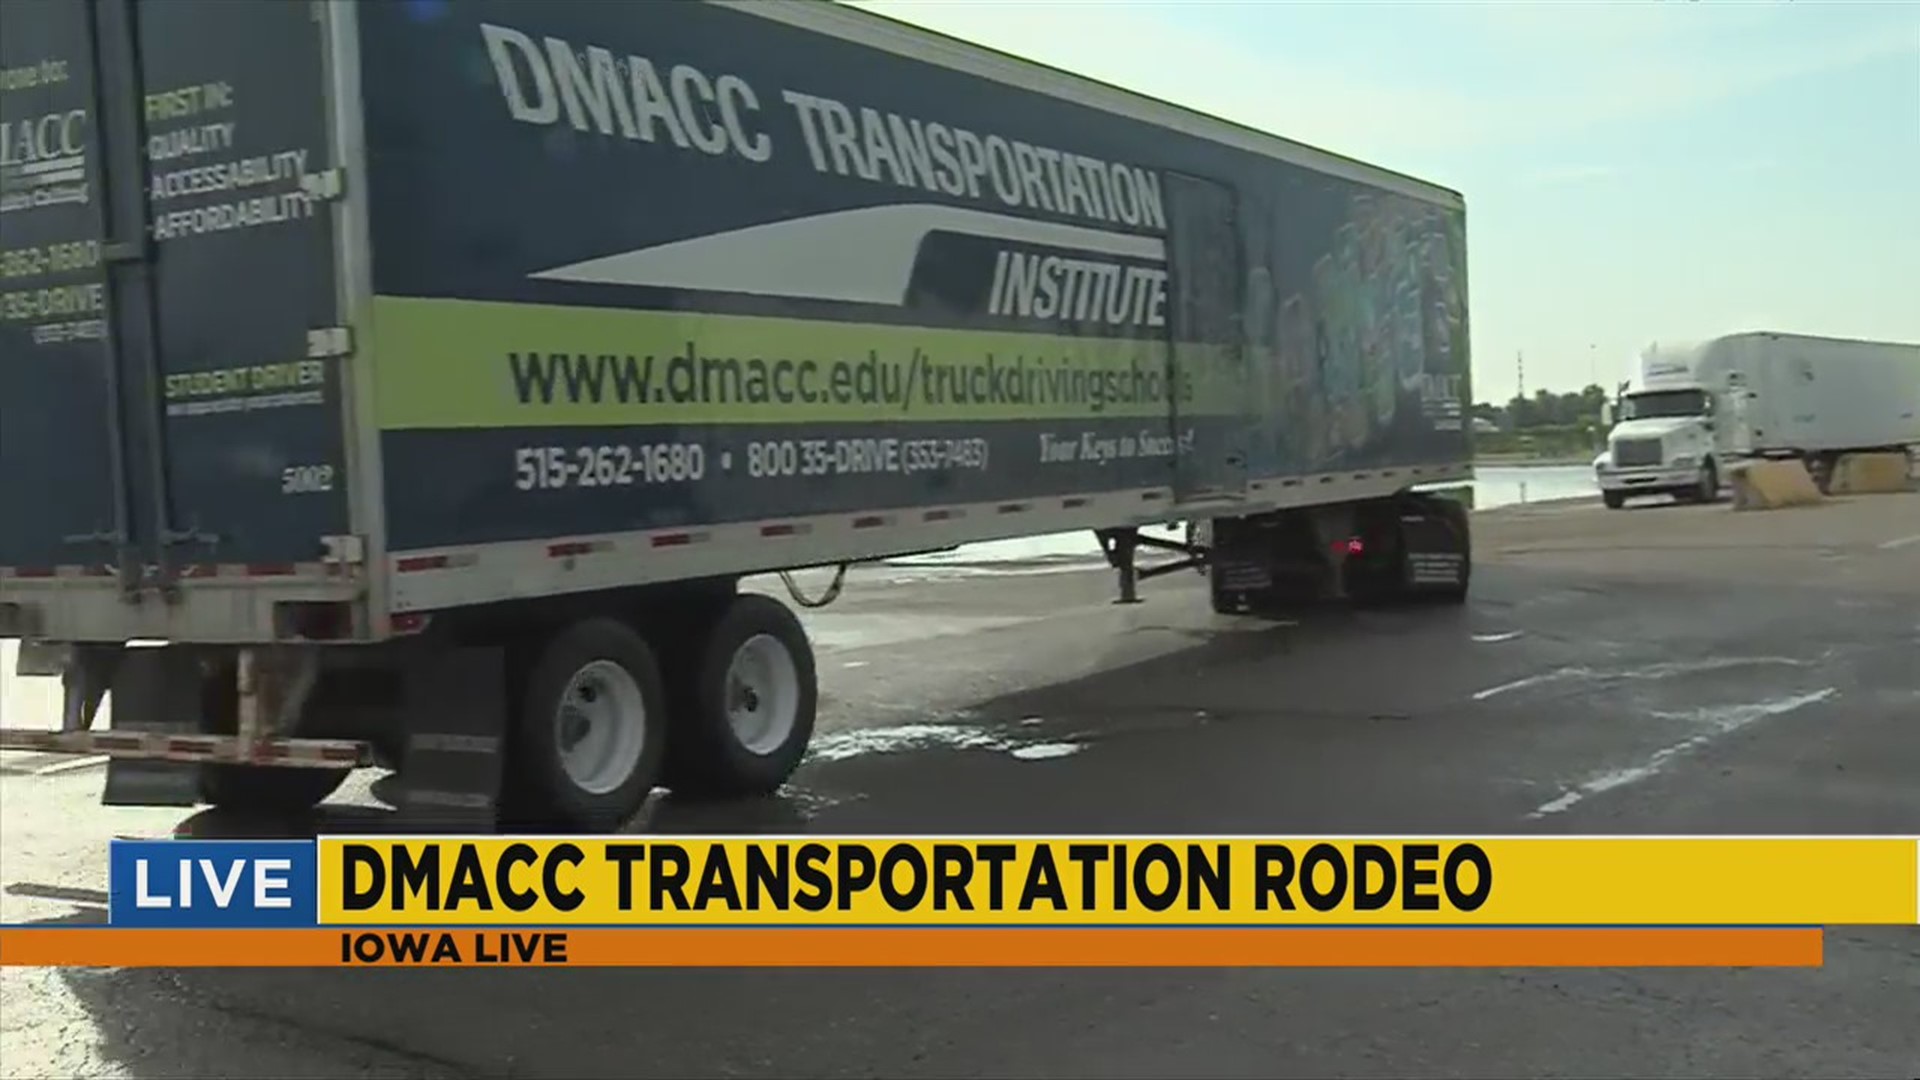 DMACC Job Fair and Truck Rodeo